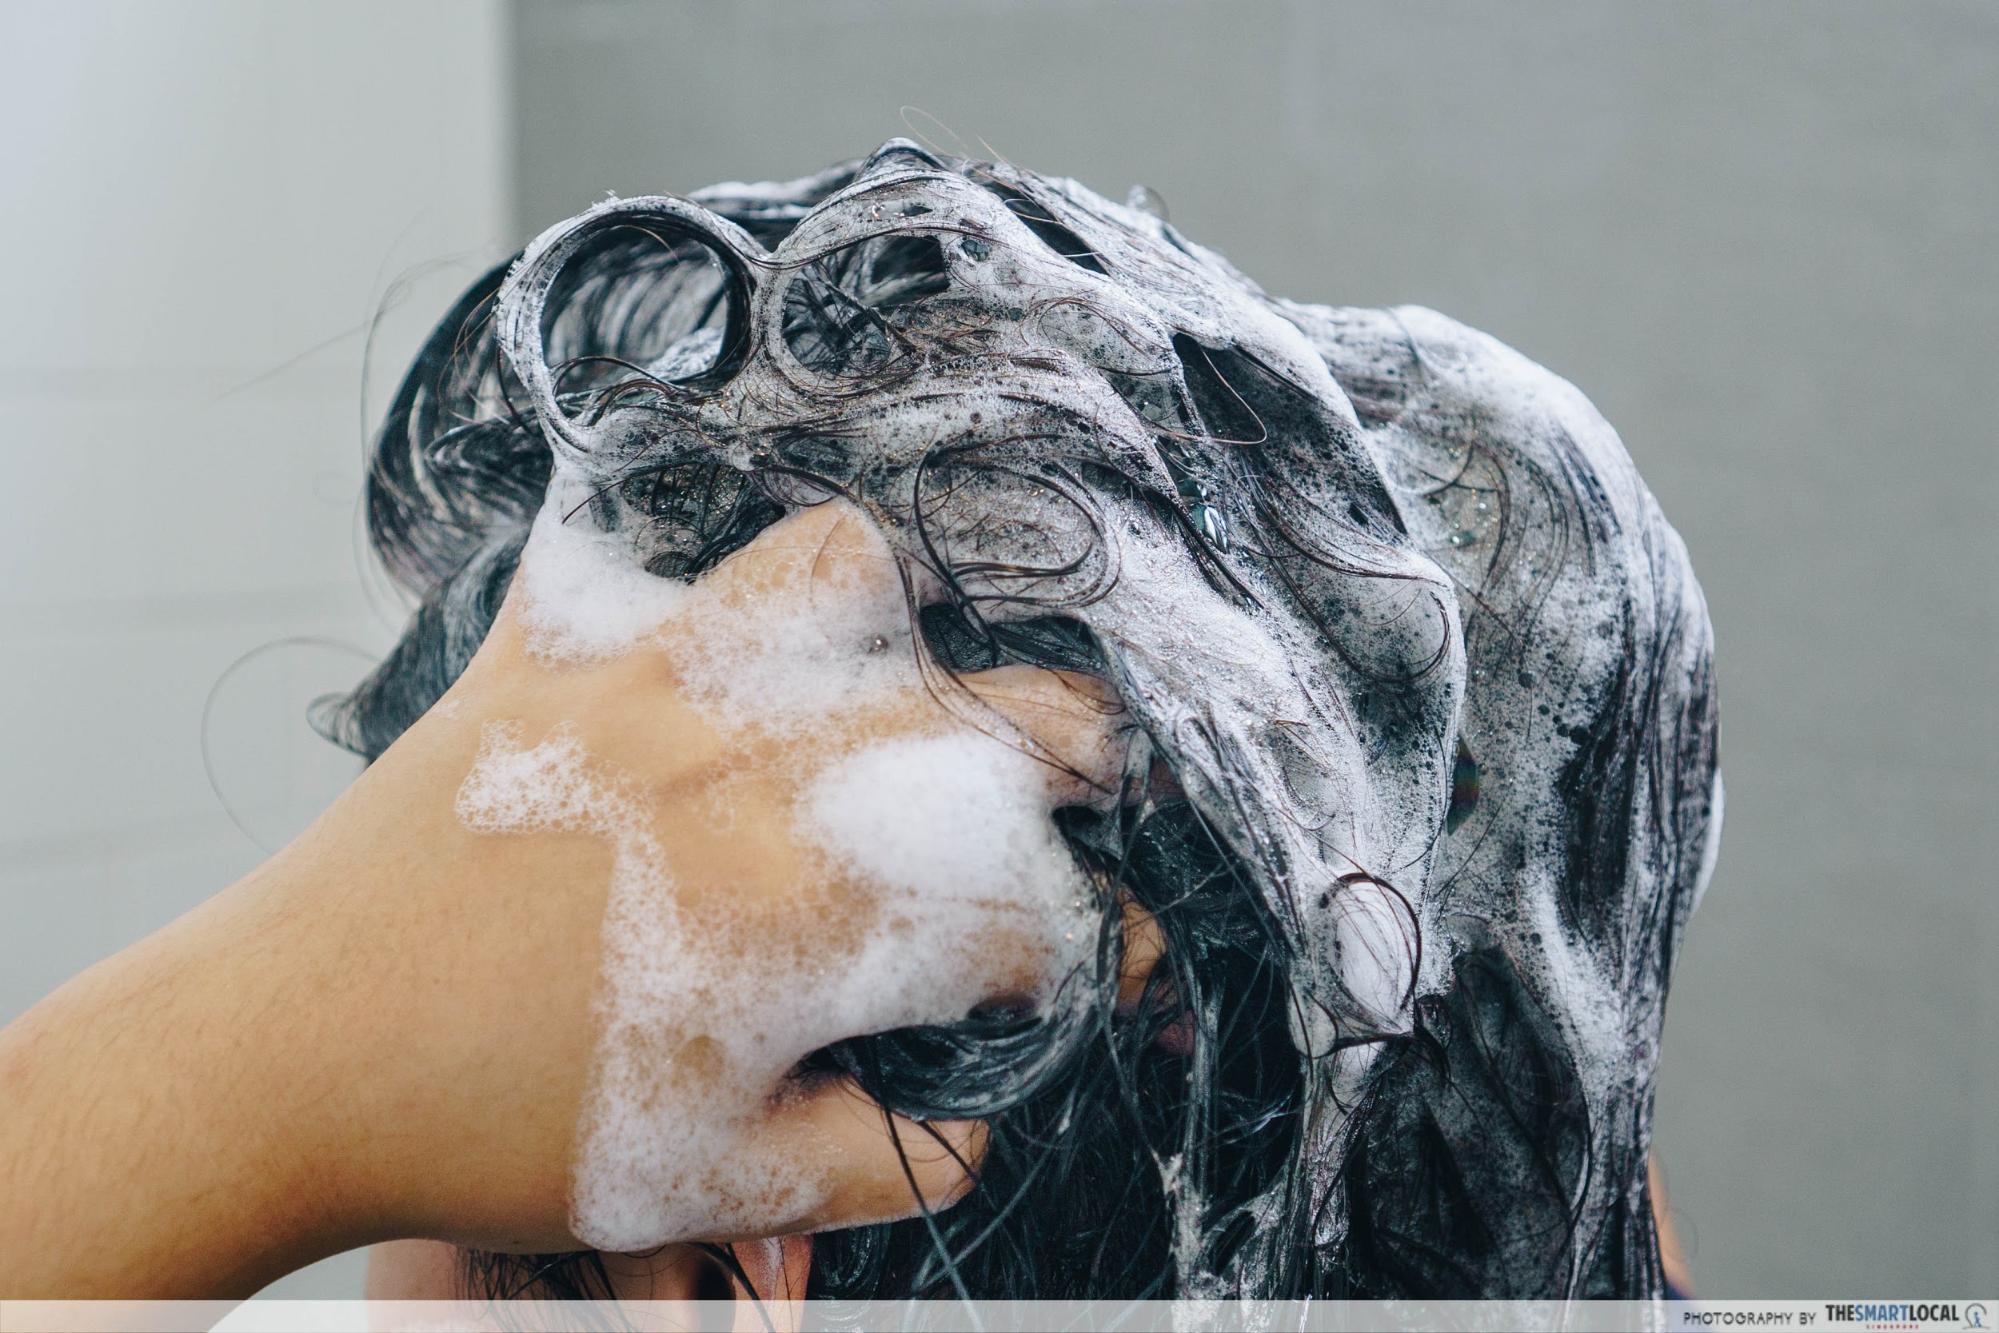 phs hairscience hair washing mistakes lather